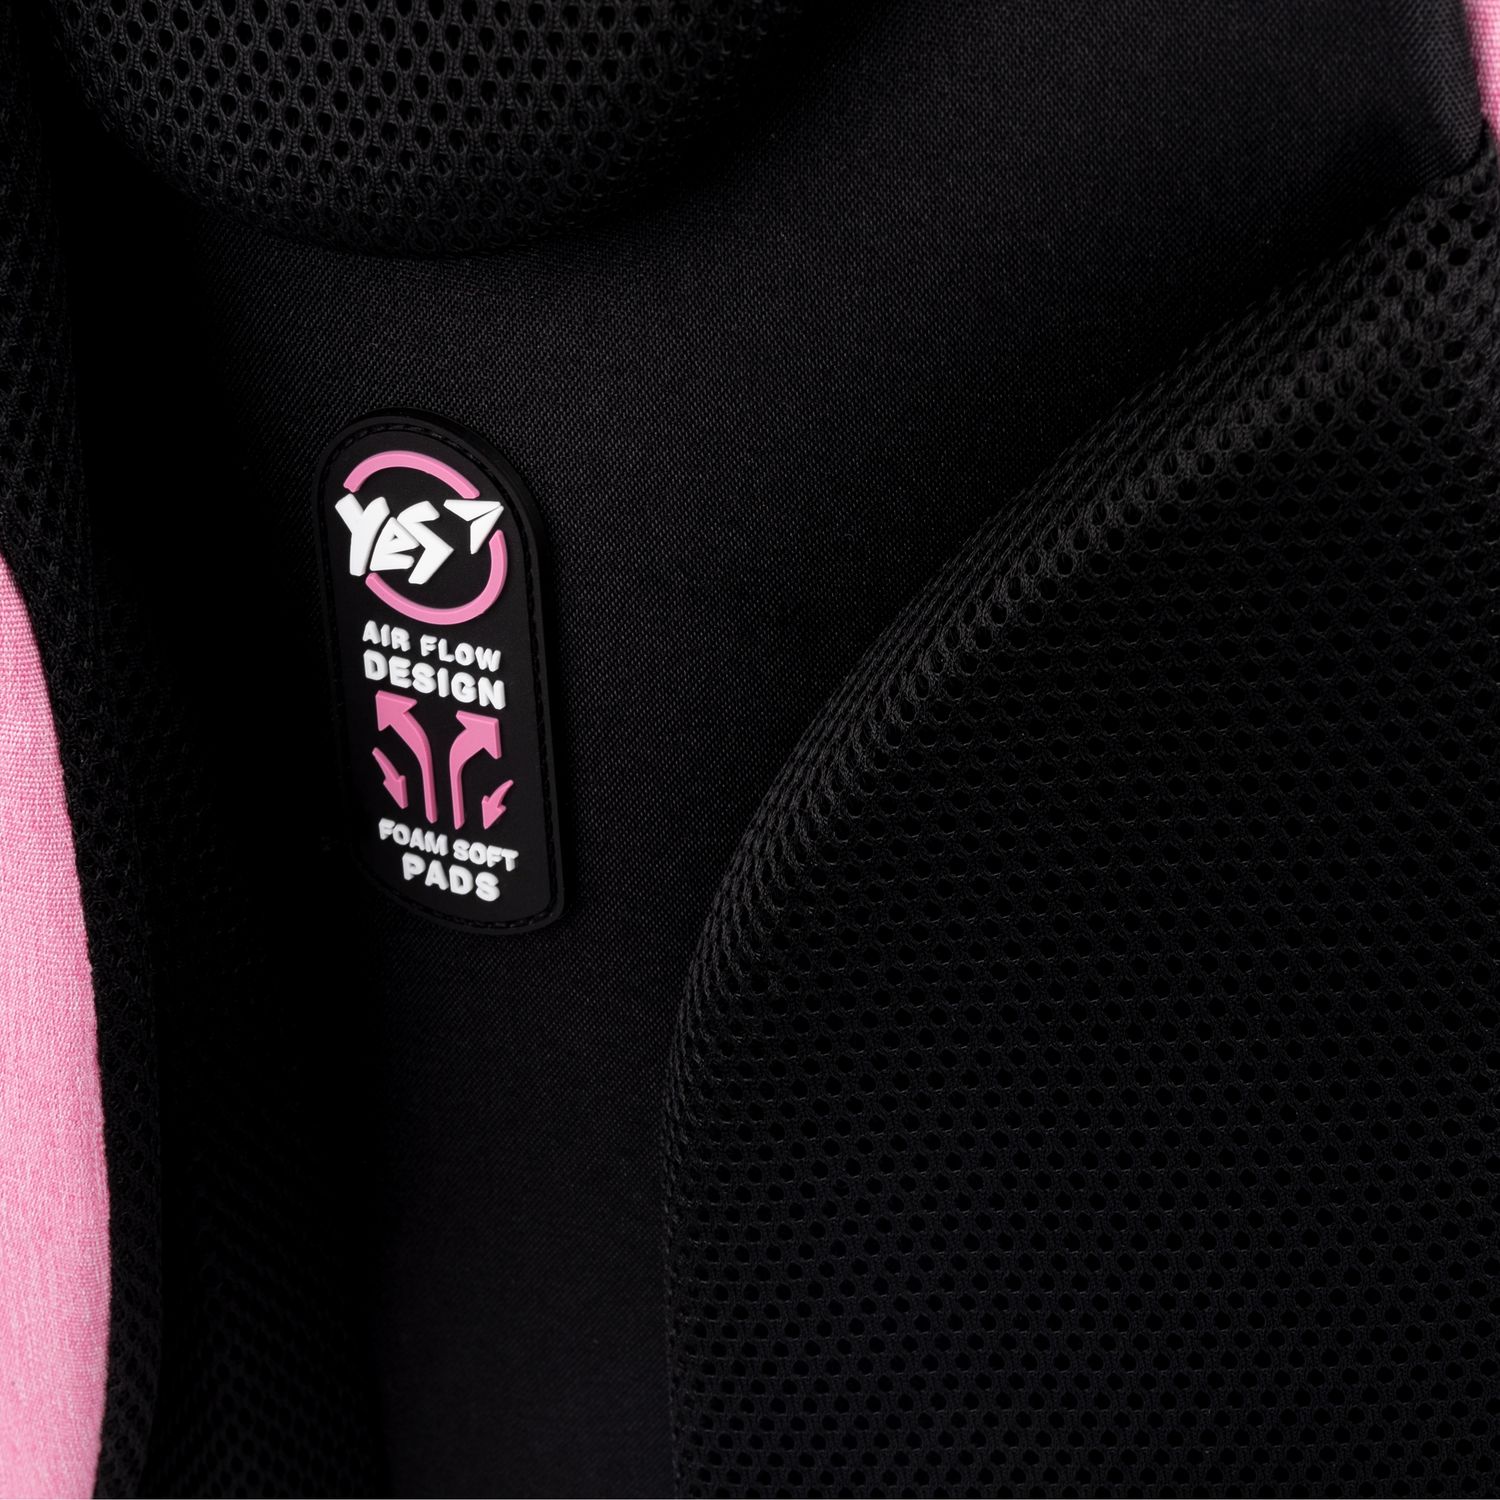 Рюкзак Yes TS-61 Girl Wonderful, черный с розовым (558908) - фото 11